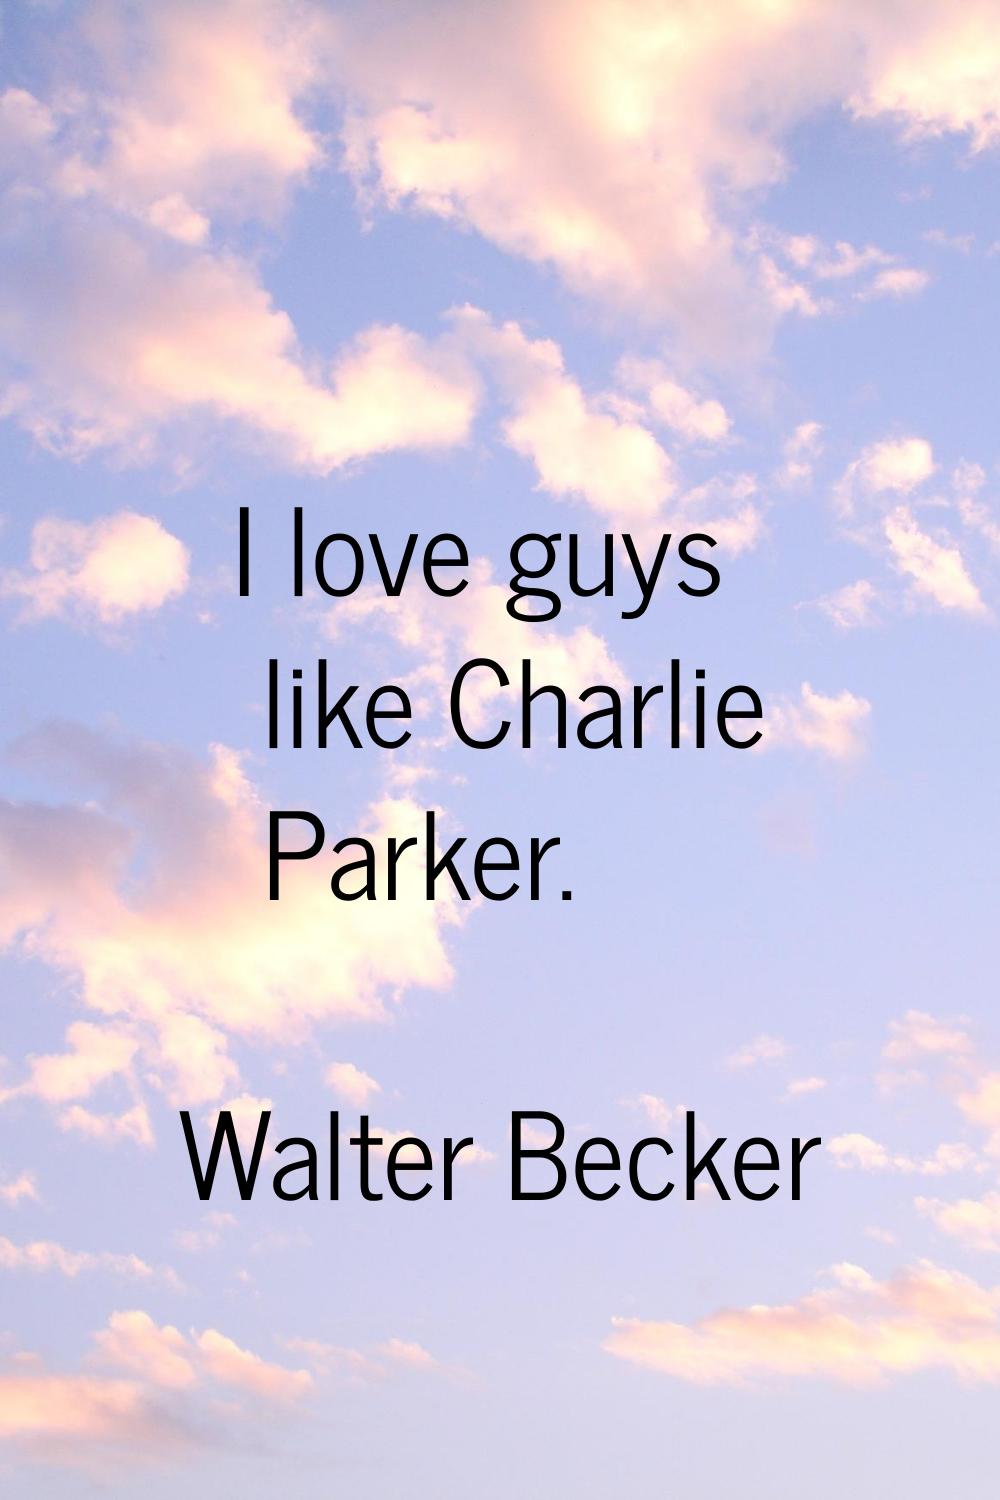 I love guys like Charlie Parker.